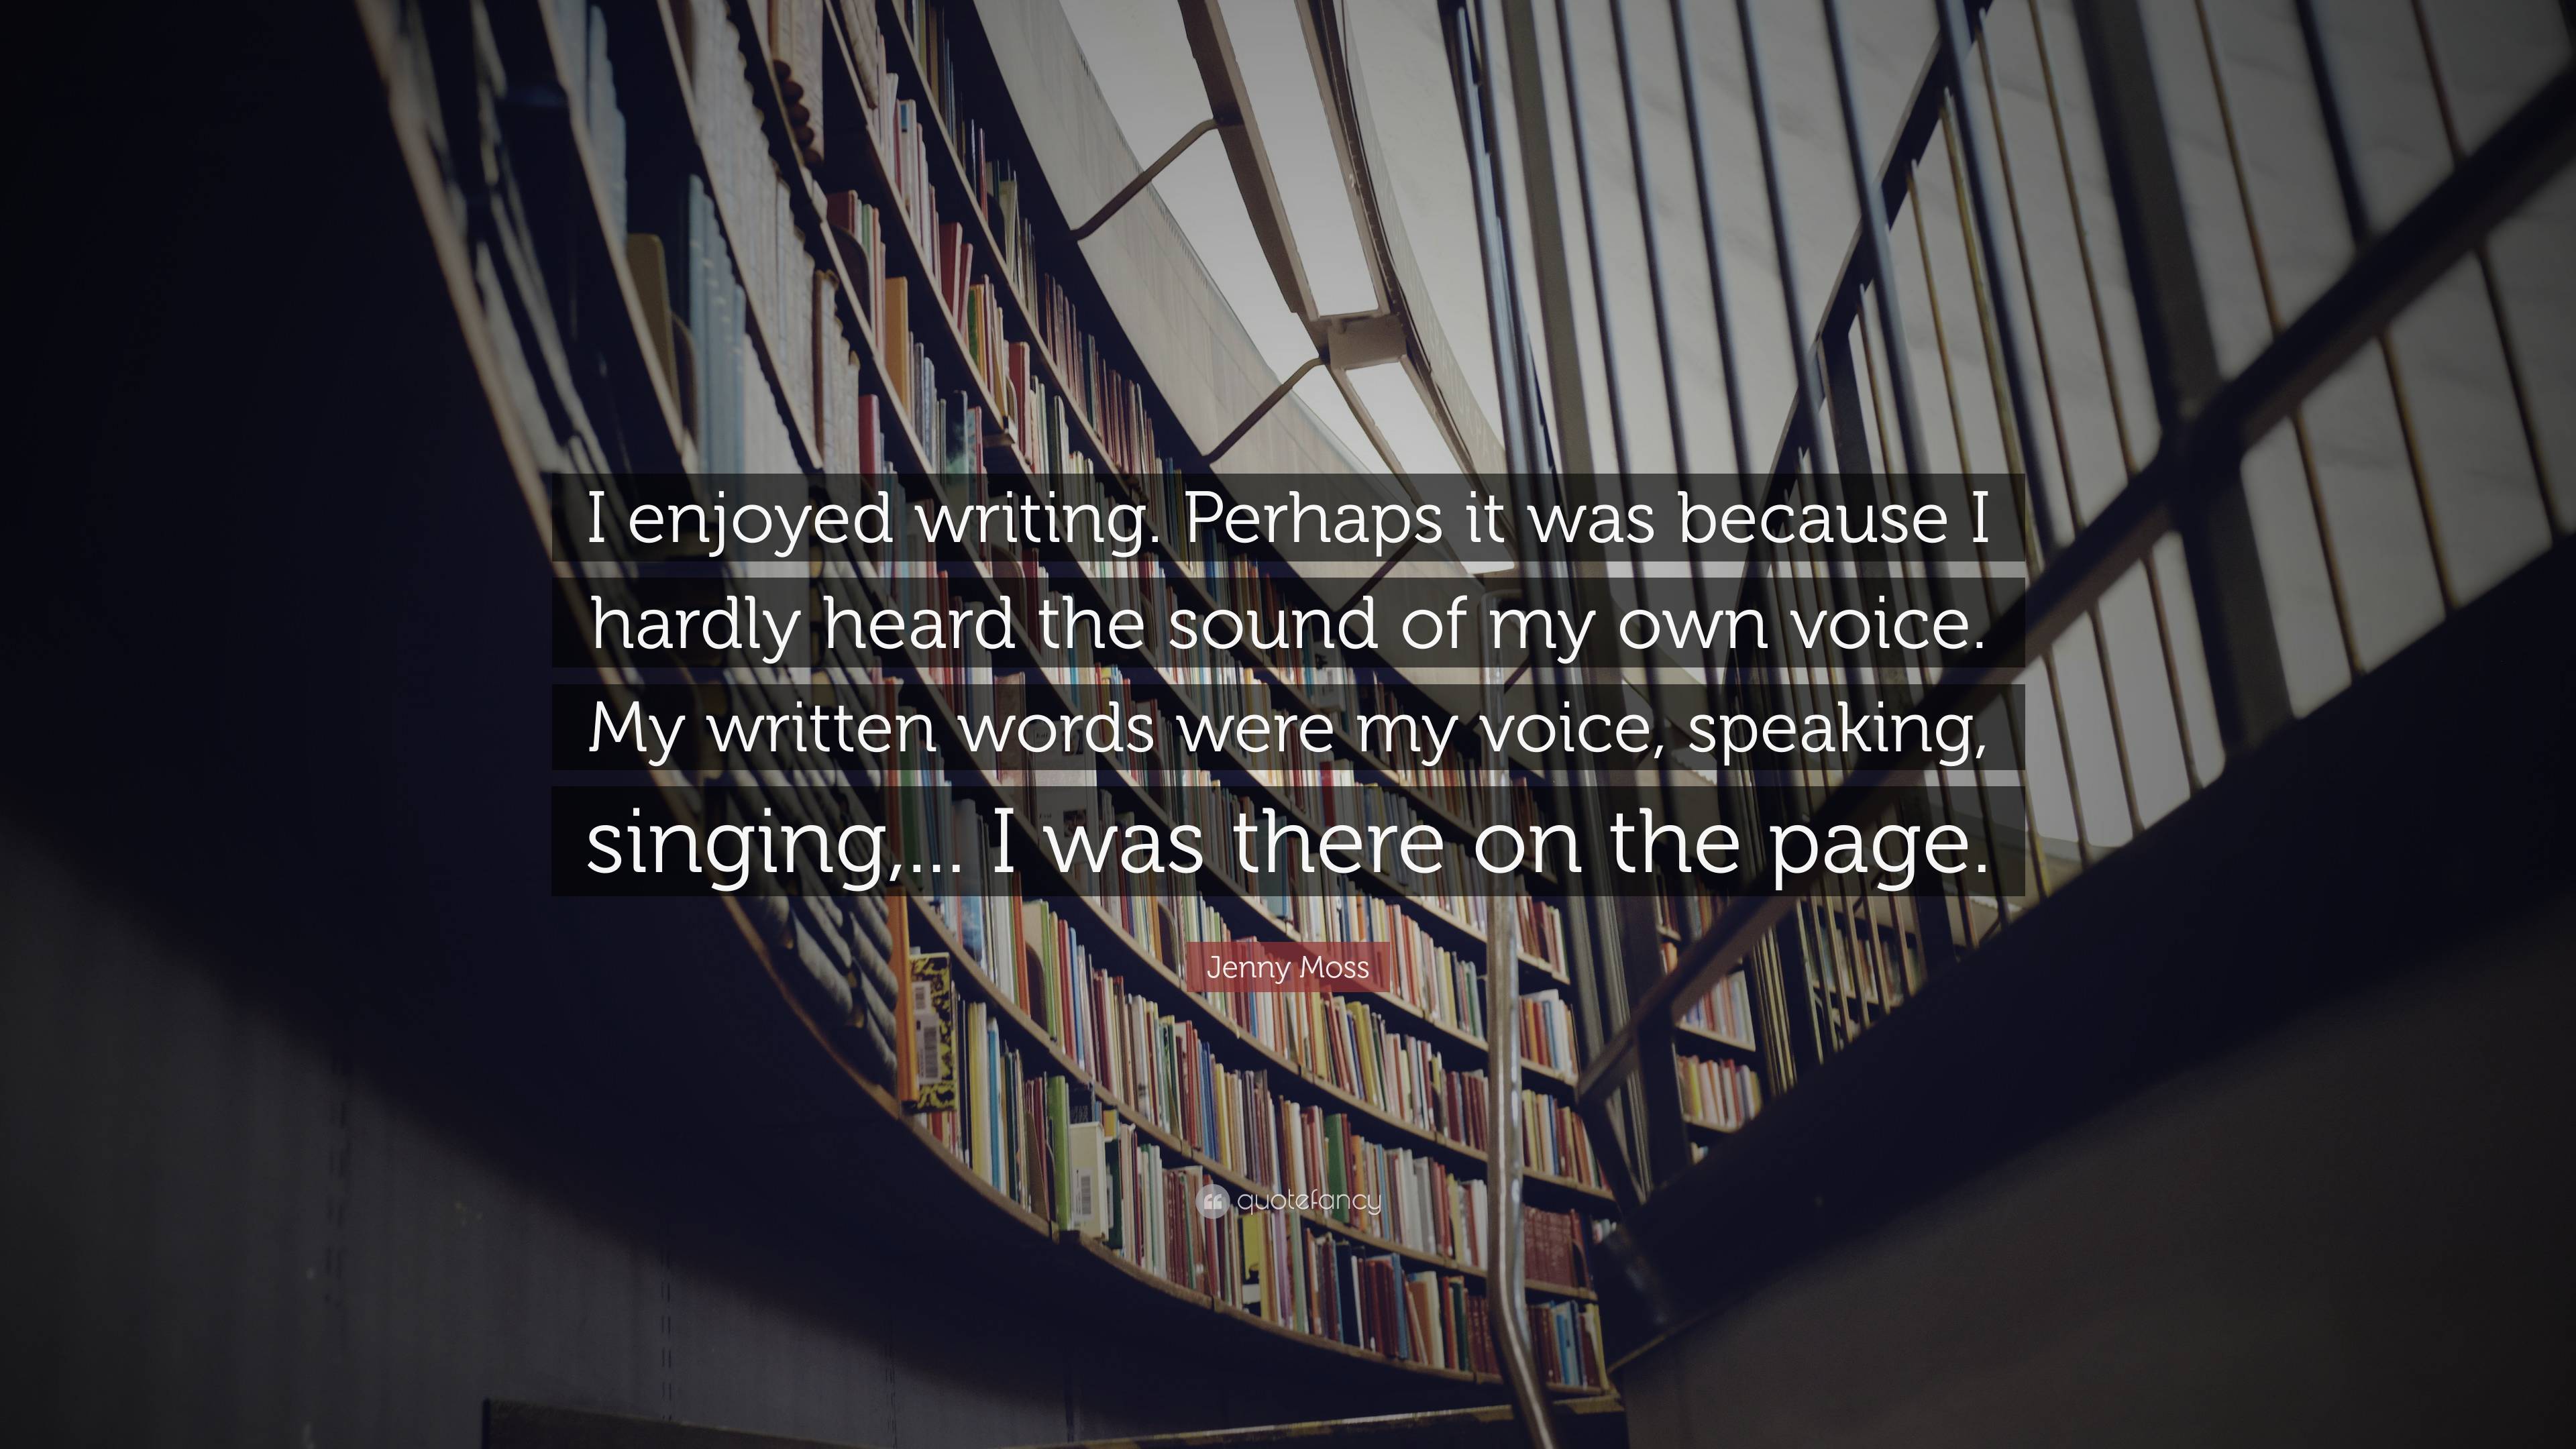 Jenny Moss Quote: “I enjoyed writing. Perhaps it was because I hardly ...